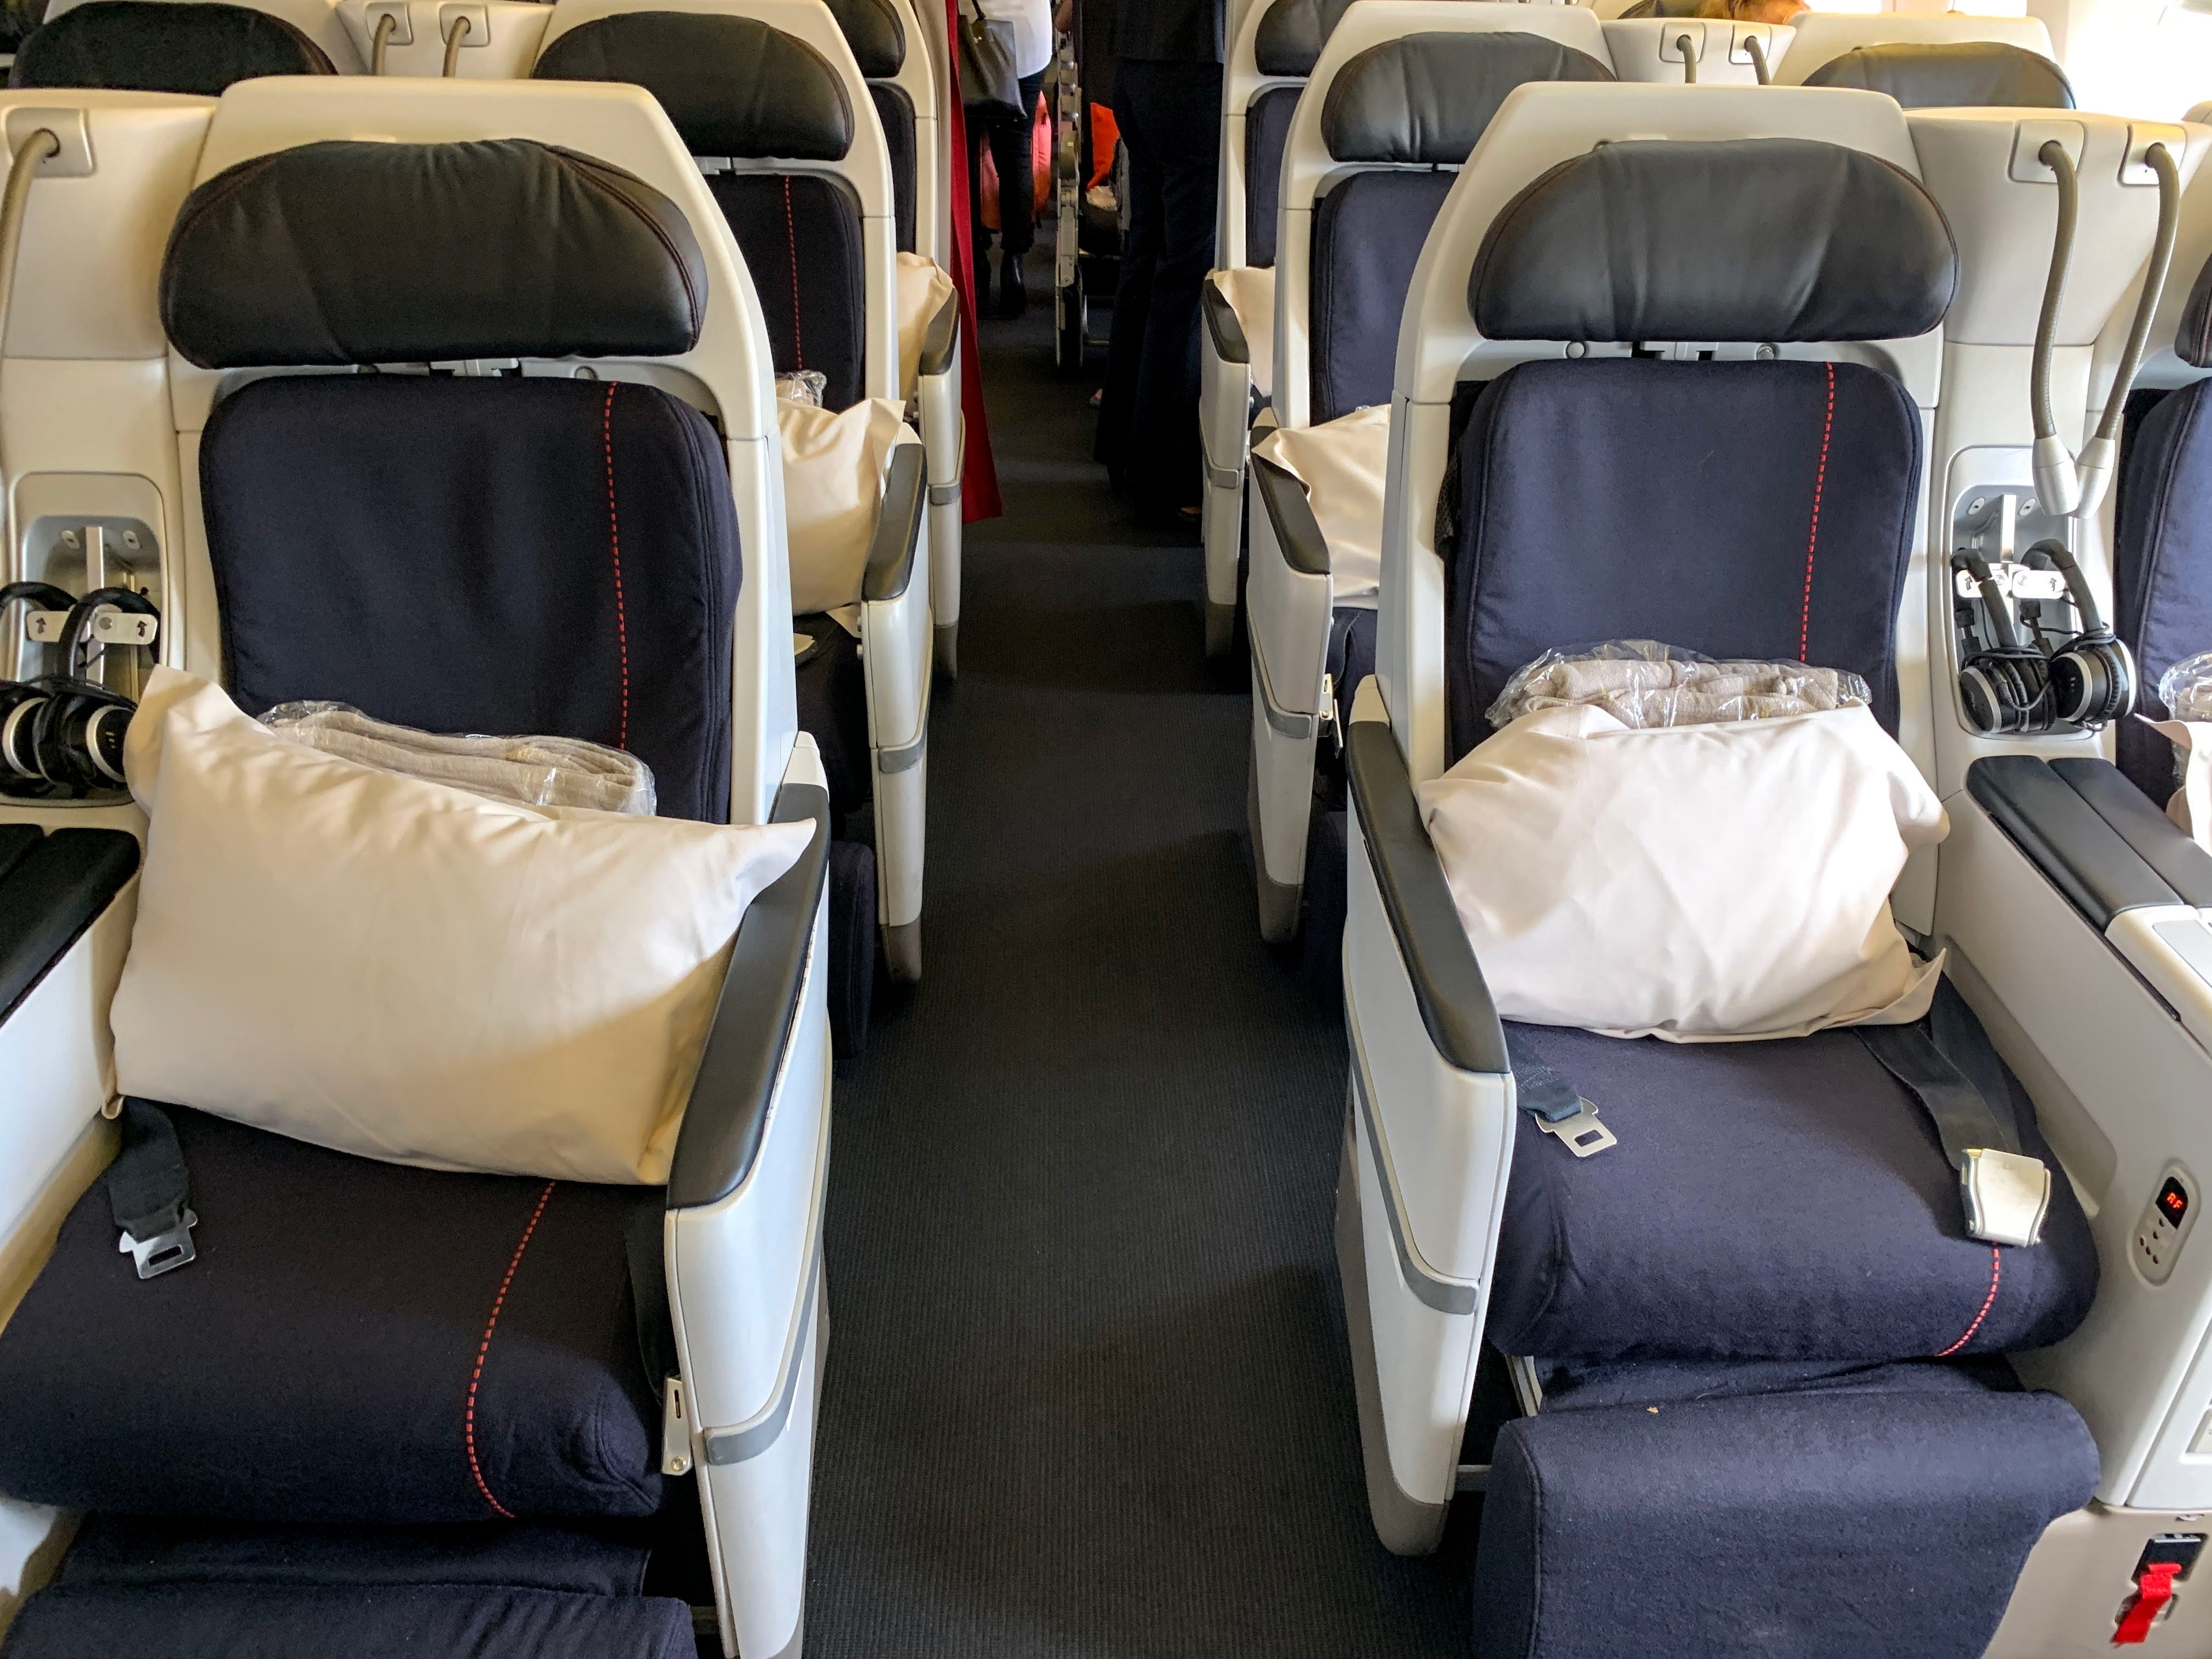 Air France Boeing 777-200 Premium Economy cabin seating